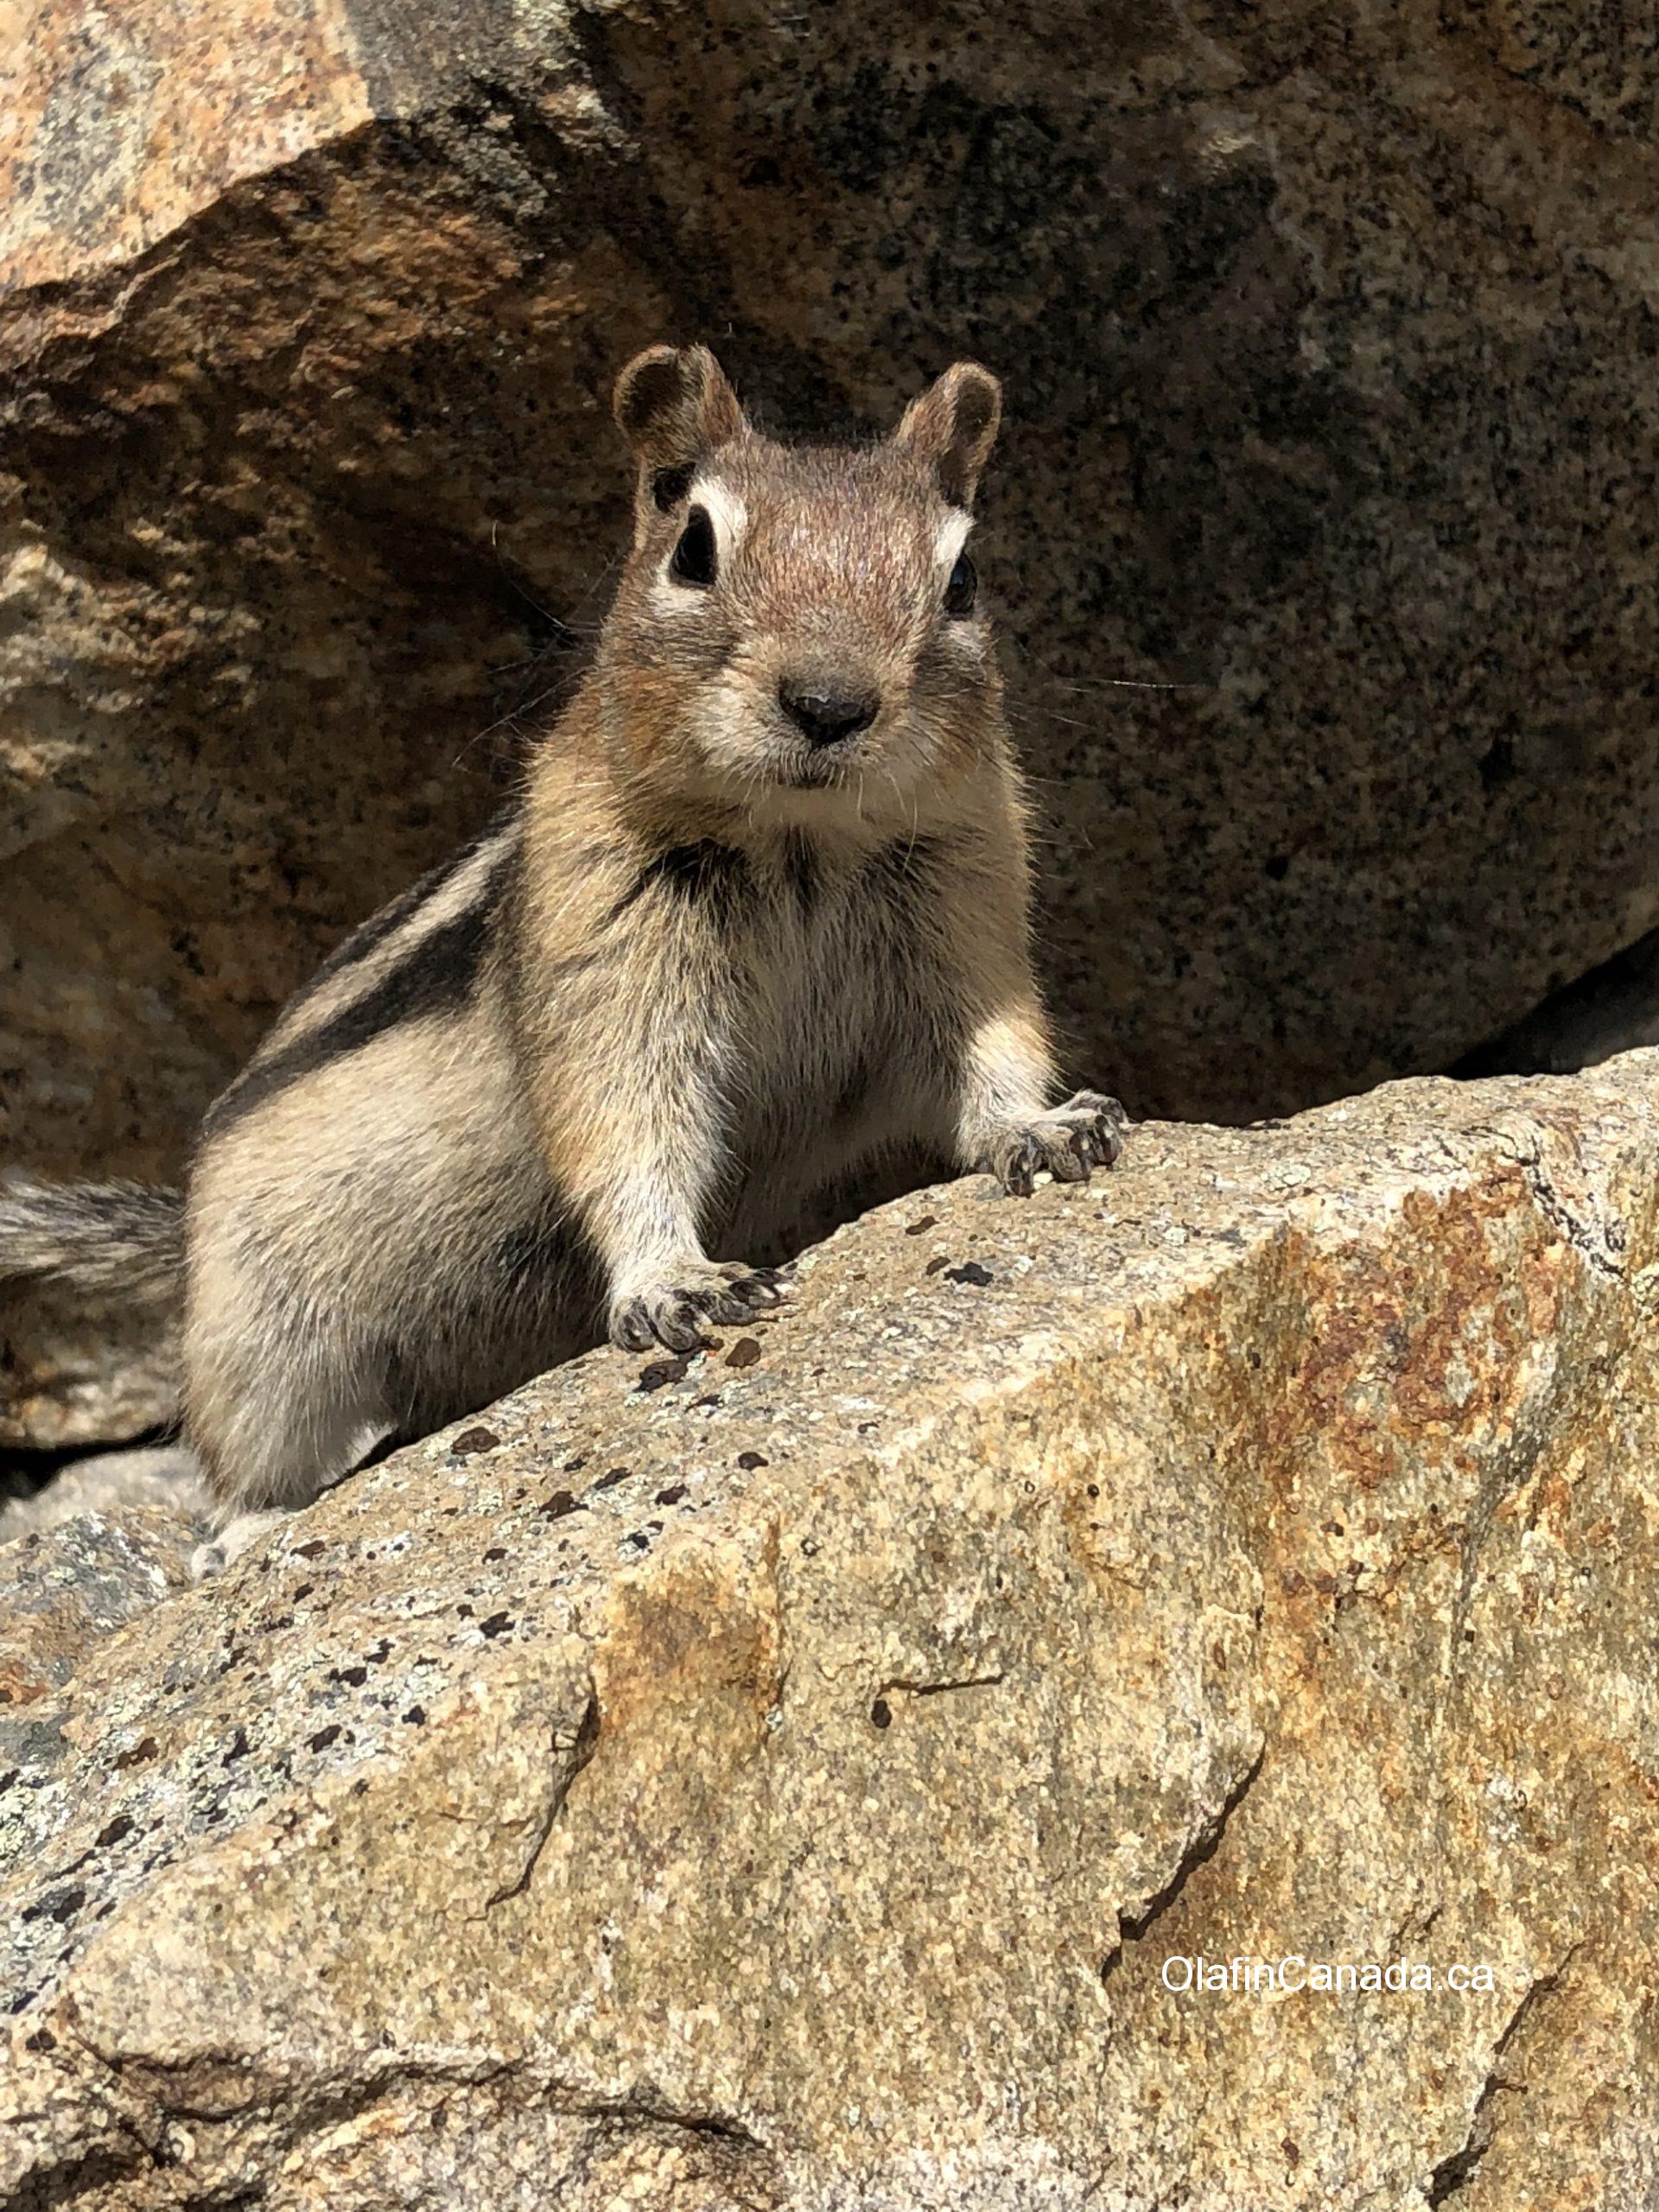 Squirrel at Myra Canyon #olafincanada #britishcolumbia #discoverbc #wildlife #okanagan #squirrel